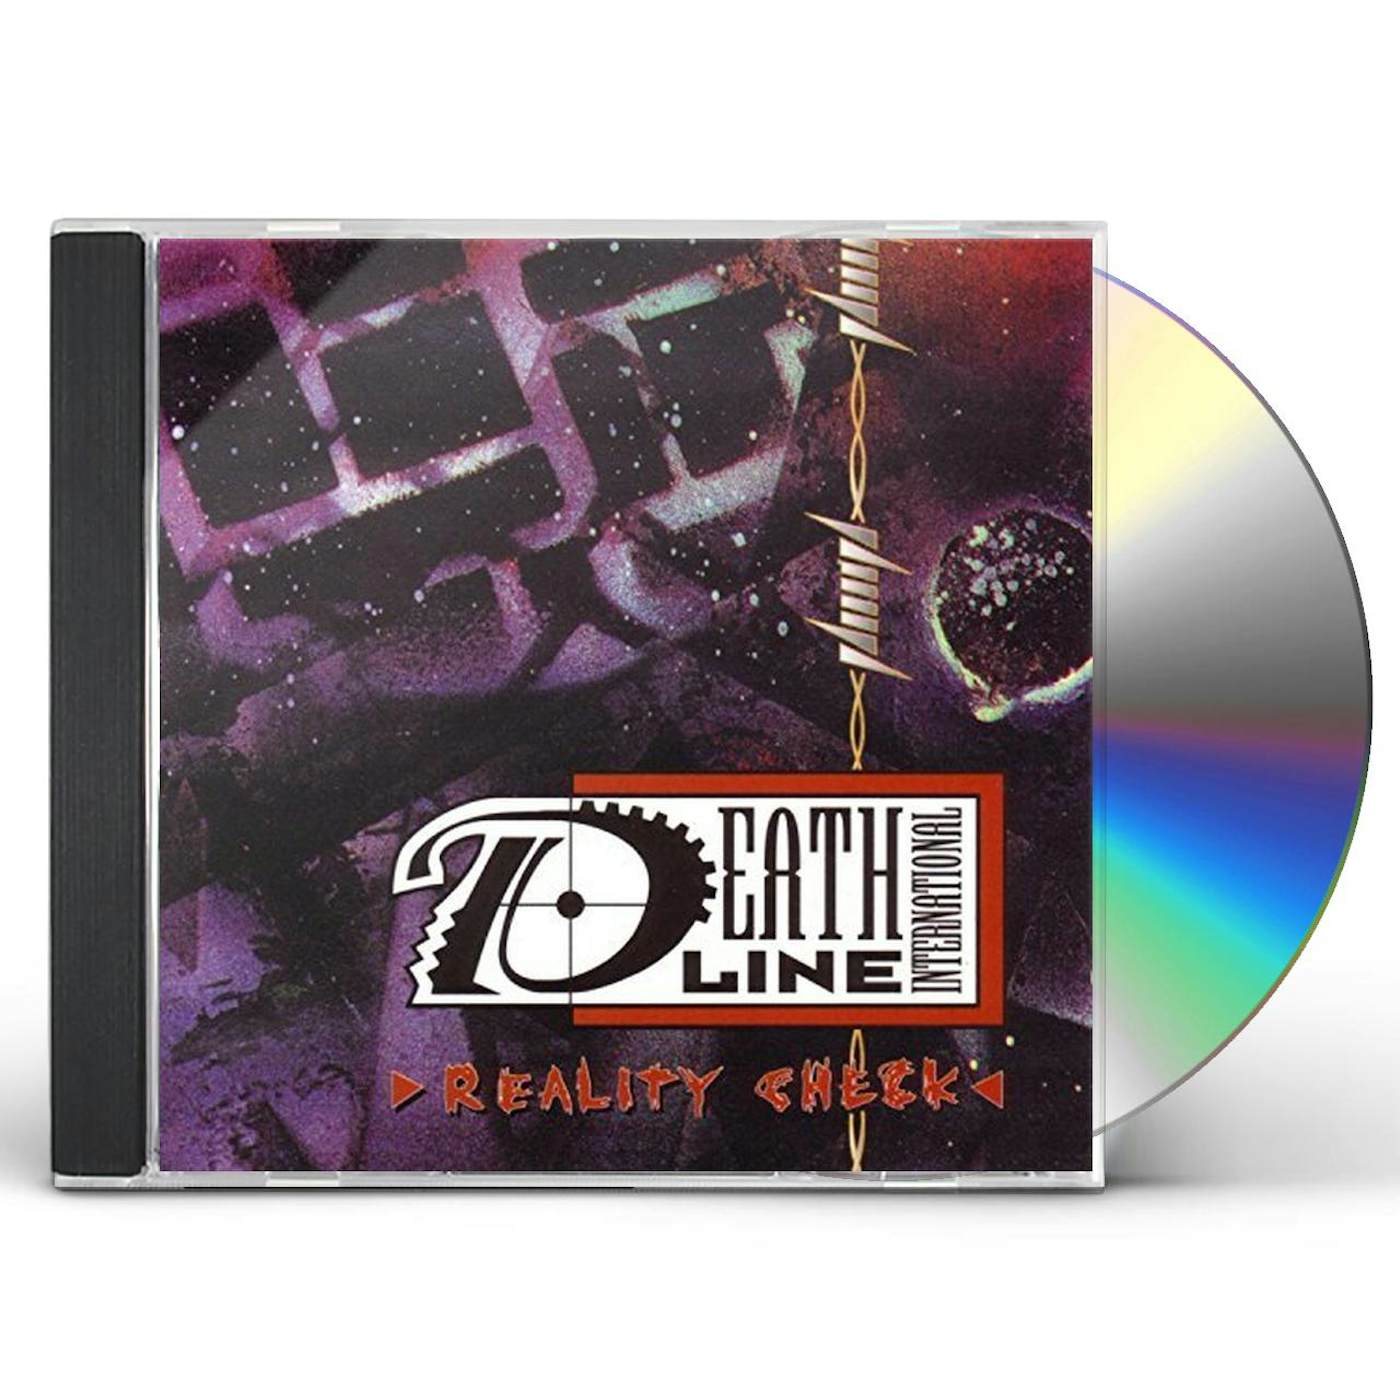 Deathline International REALITY CHECK CD